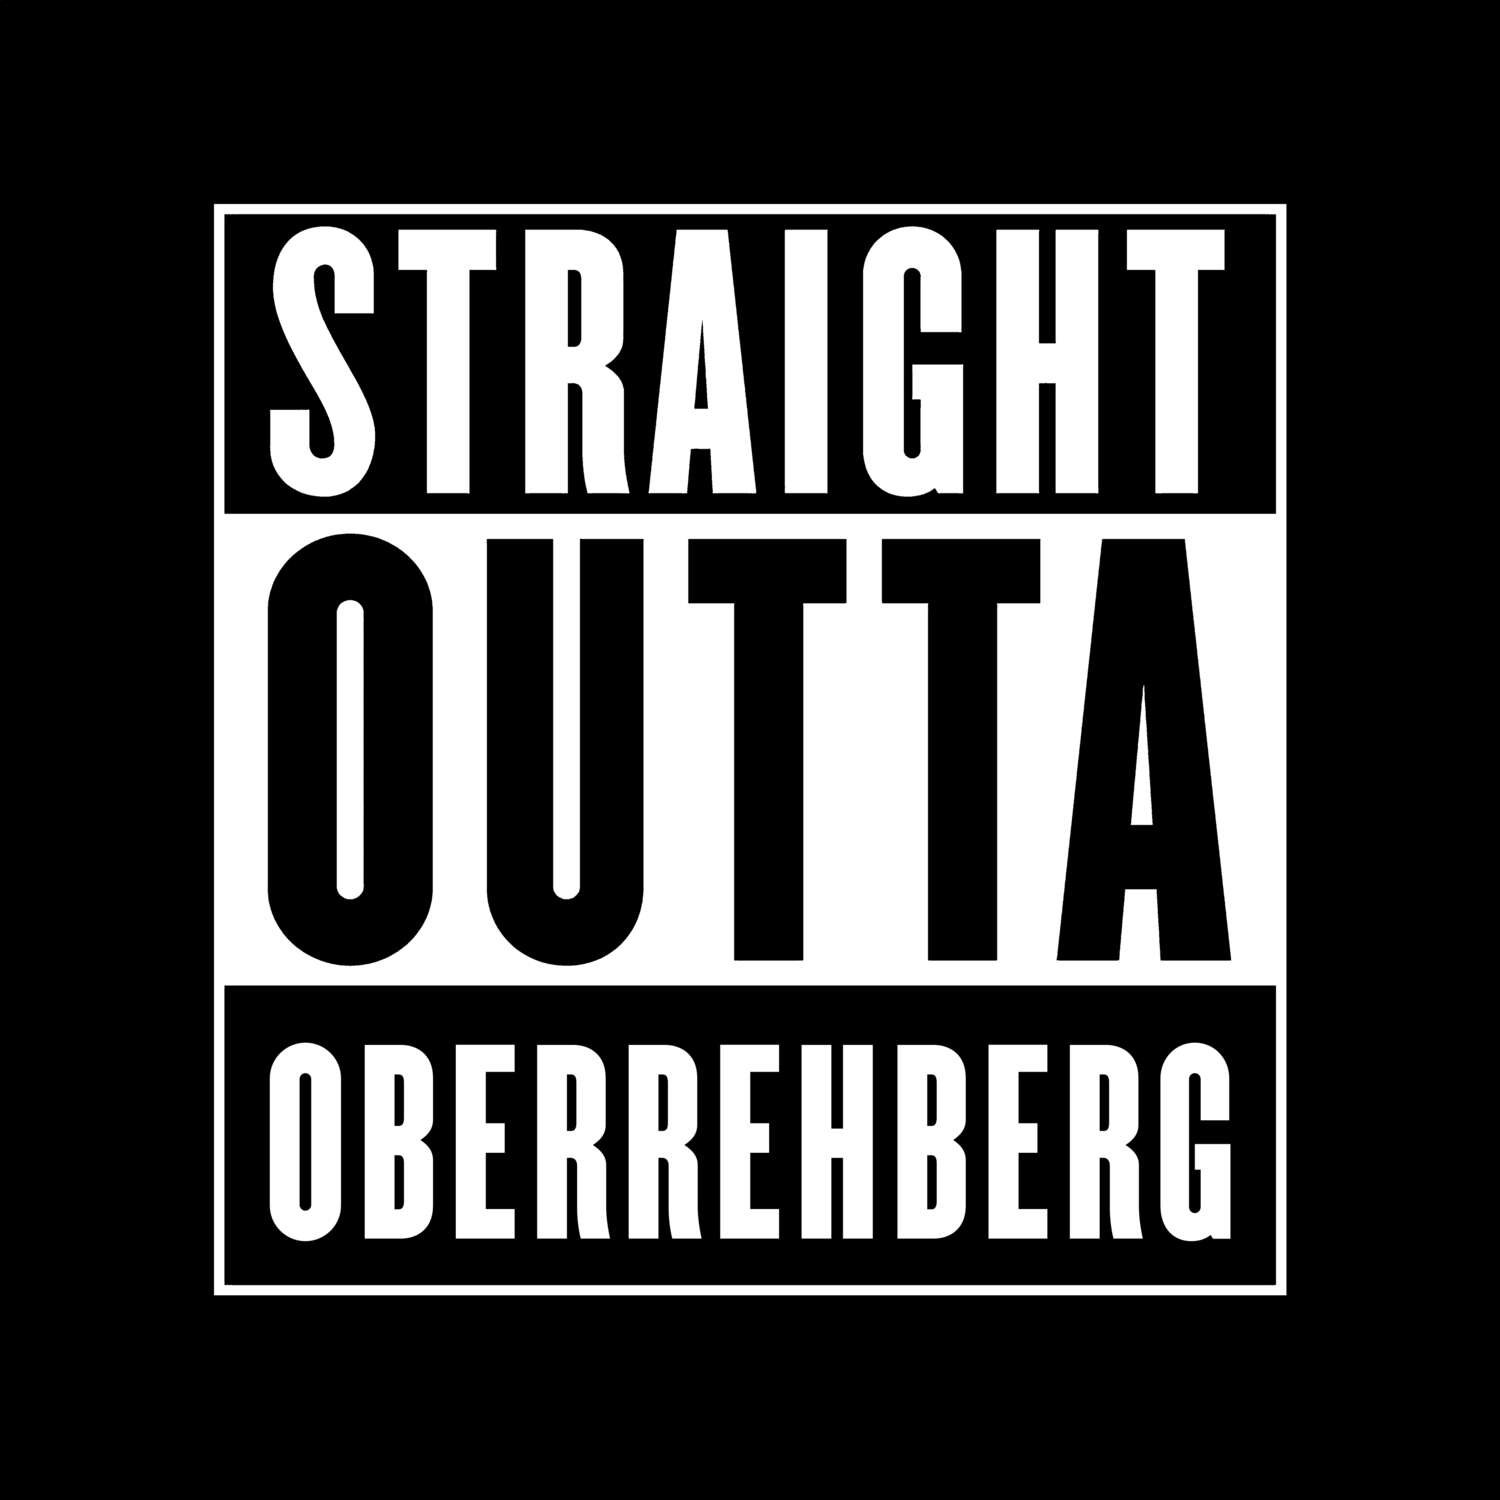 Oberrehberg T-Shirt »Straight Outta«